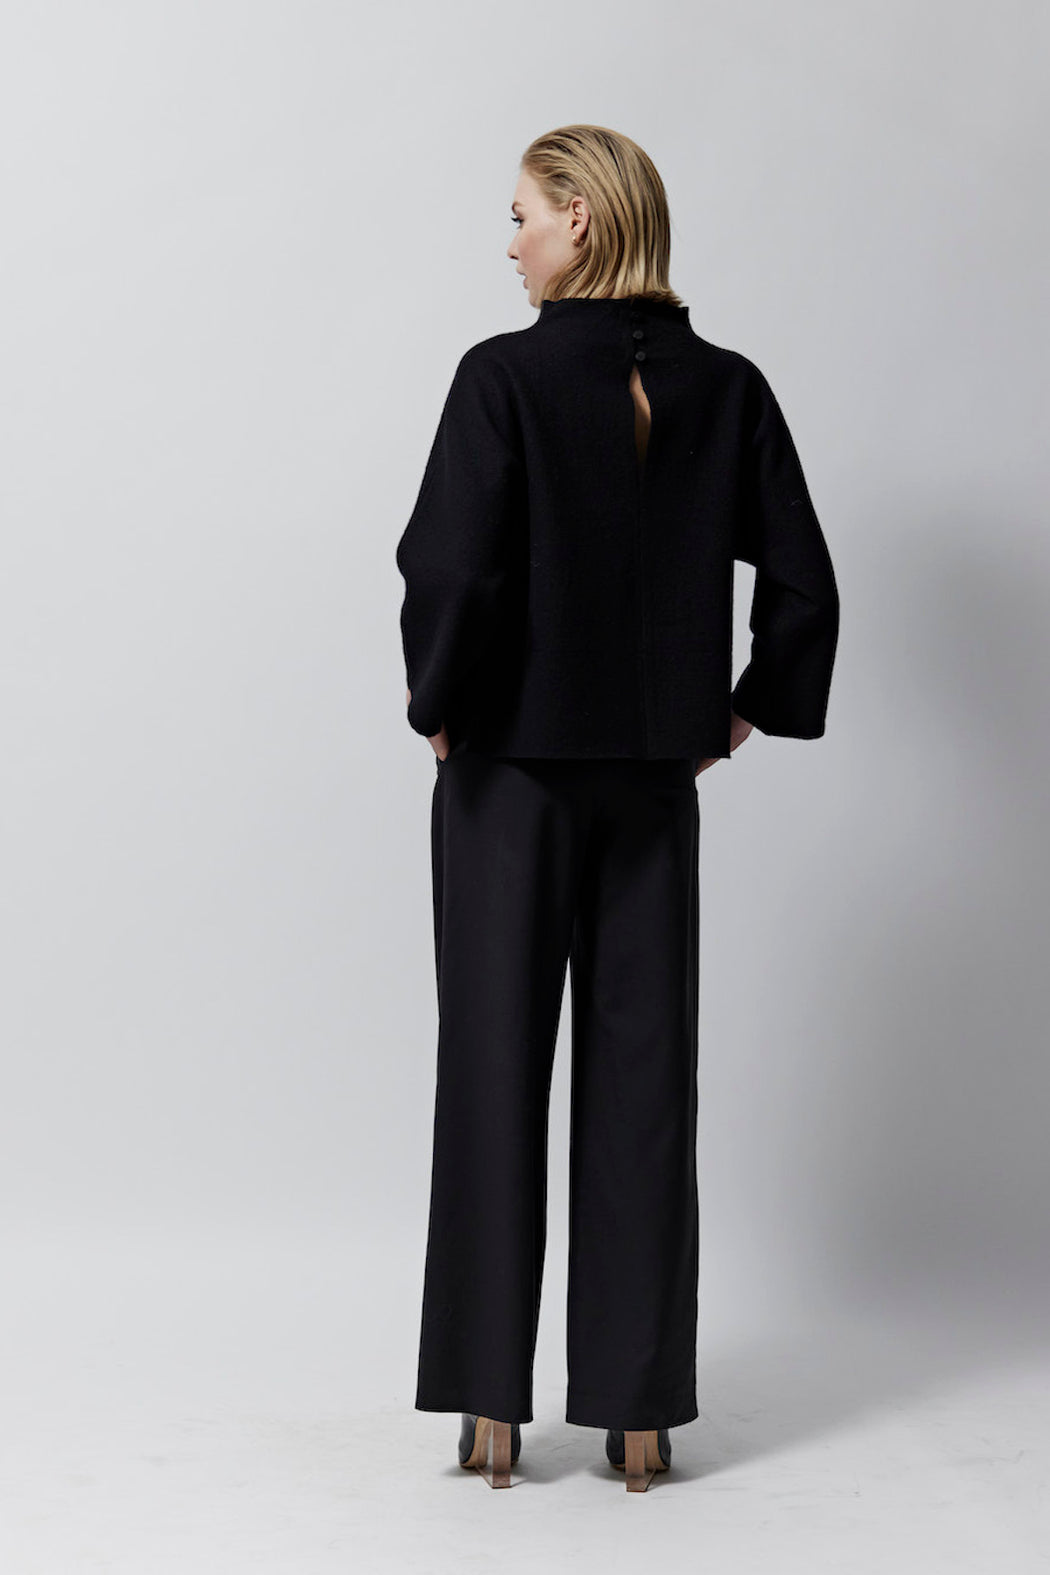 Monaco Tailored Fit Pants, Black, Eclipse Collection